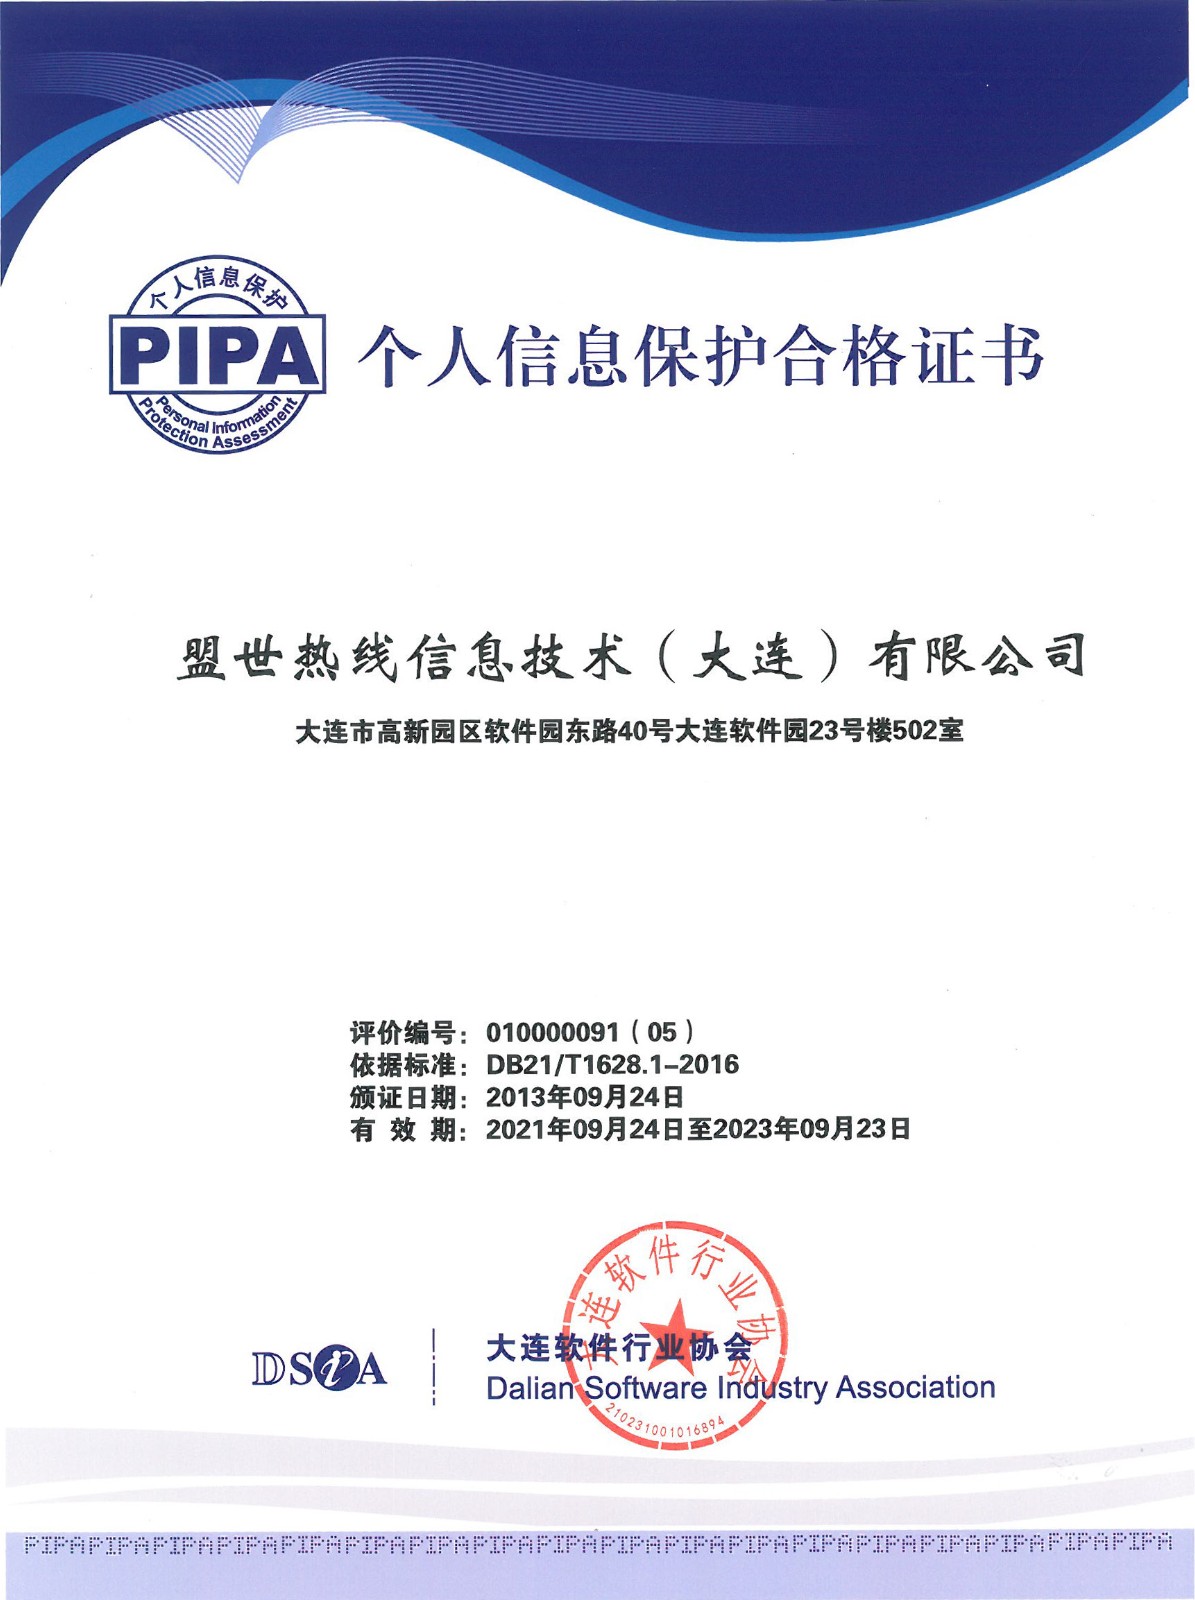 PIPA资格认证书-2021~2023.jpg